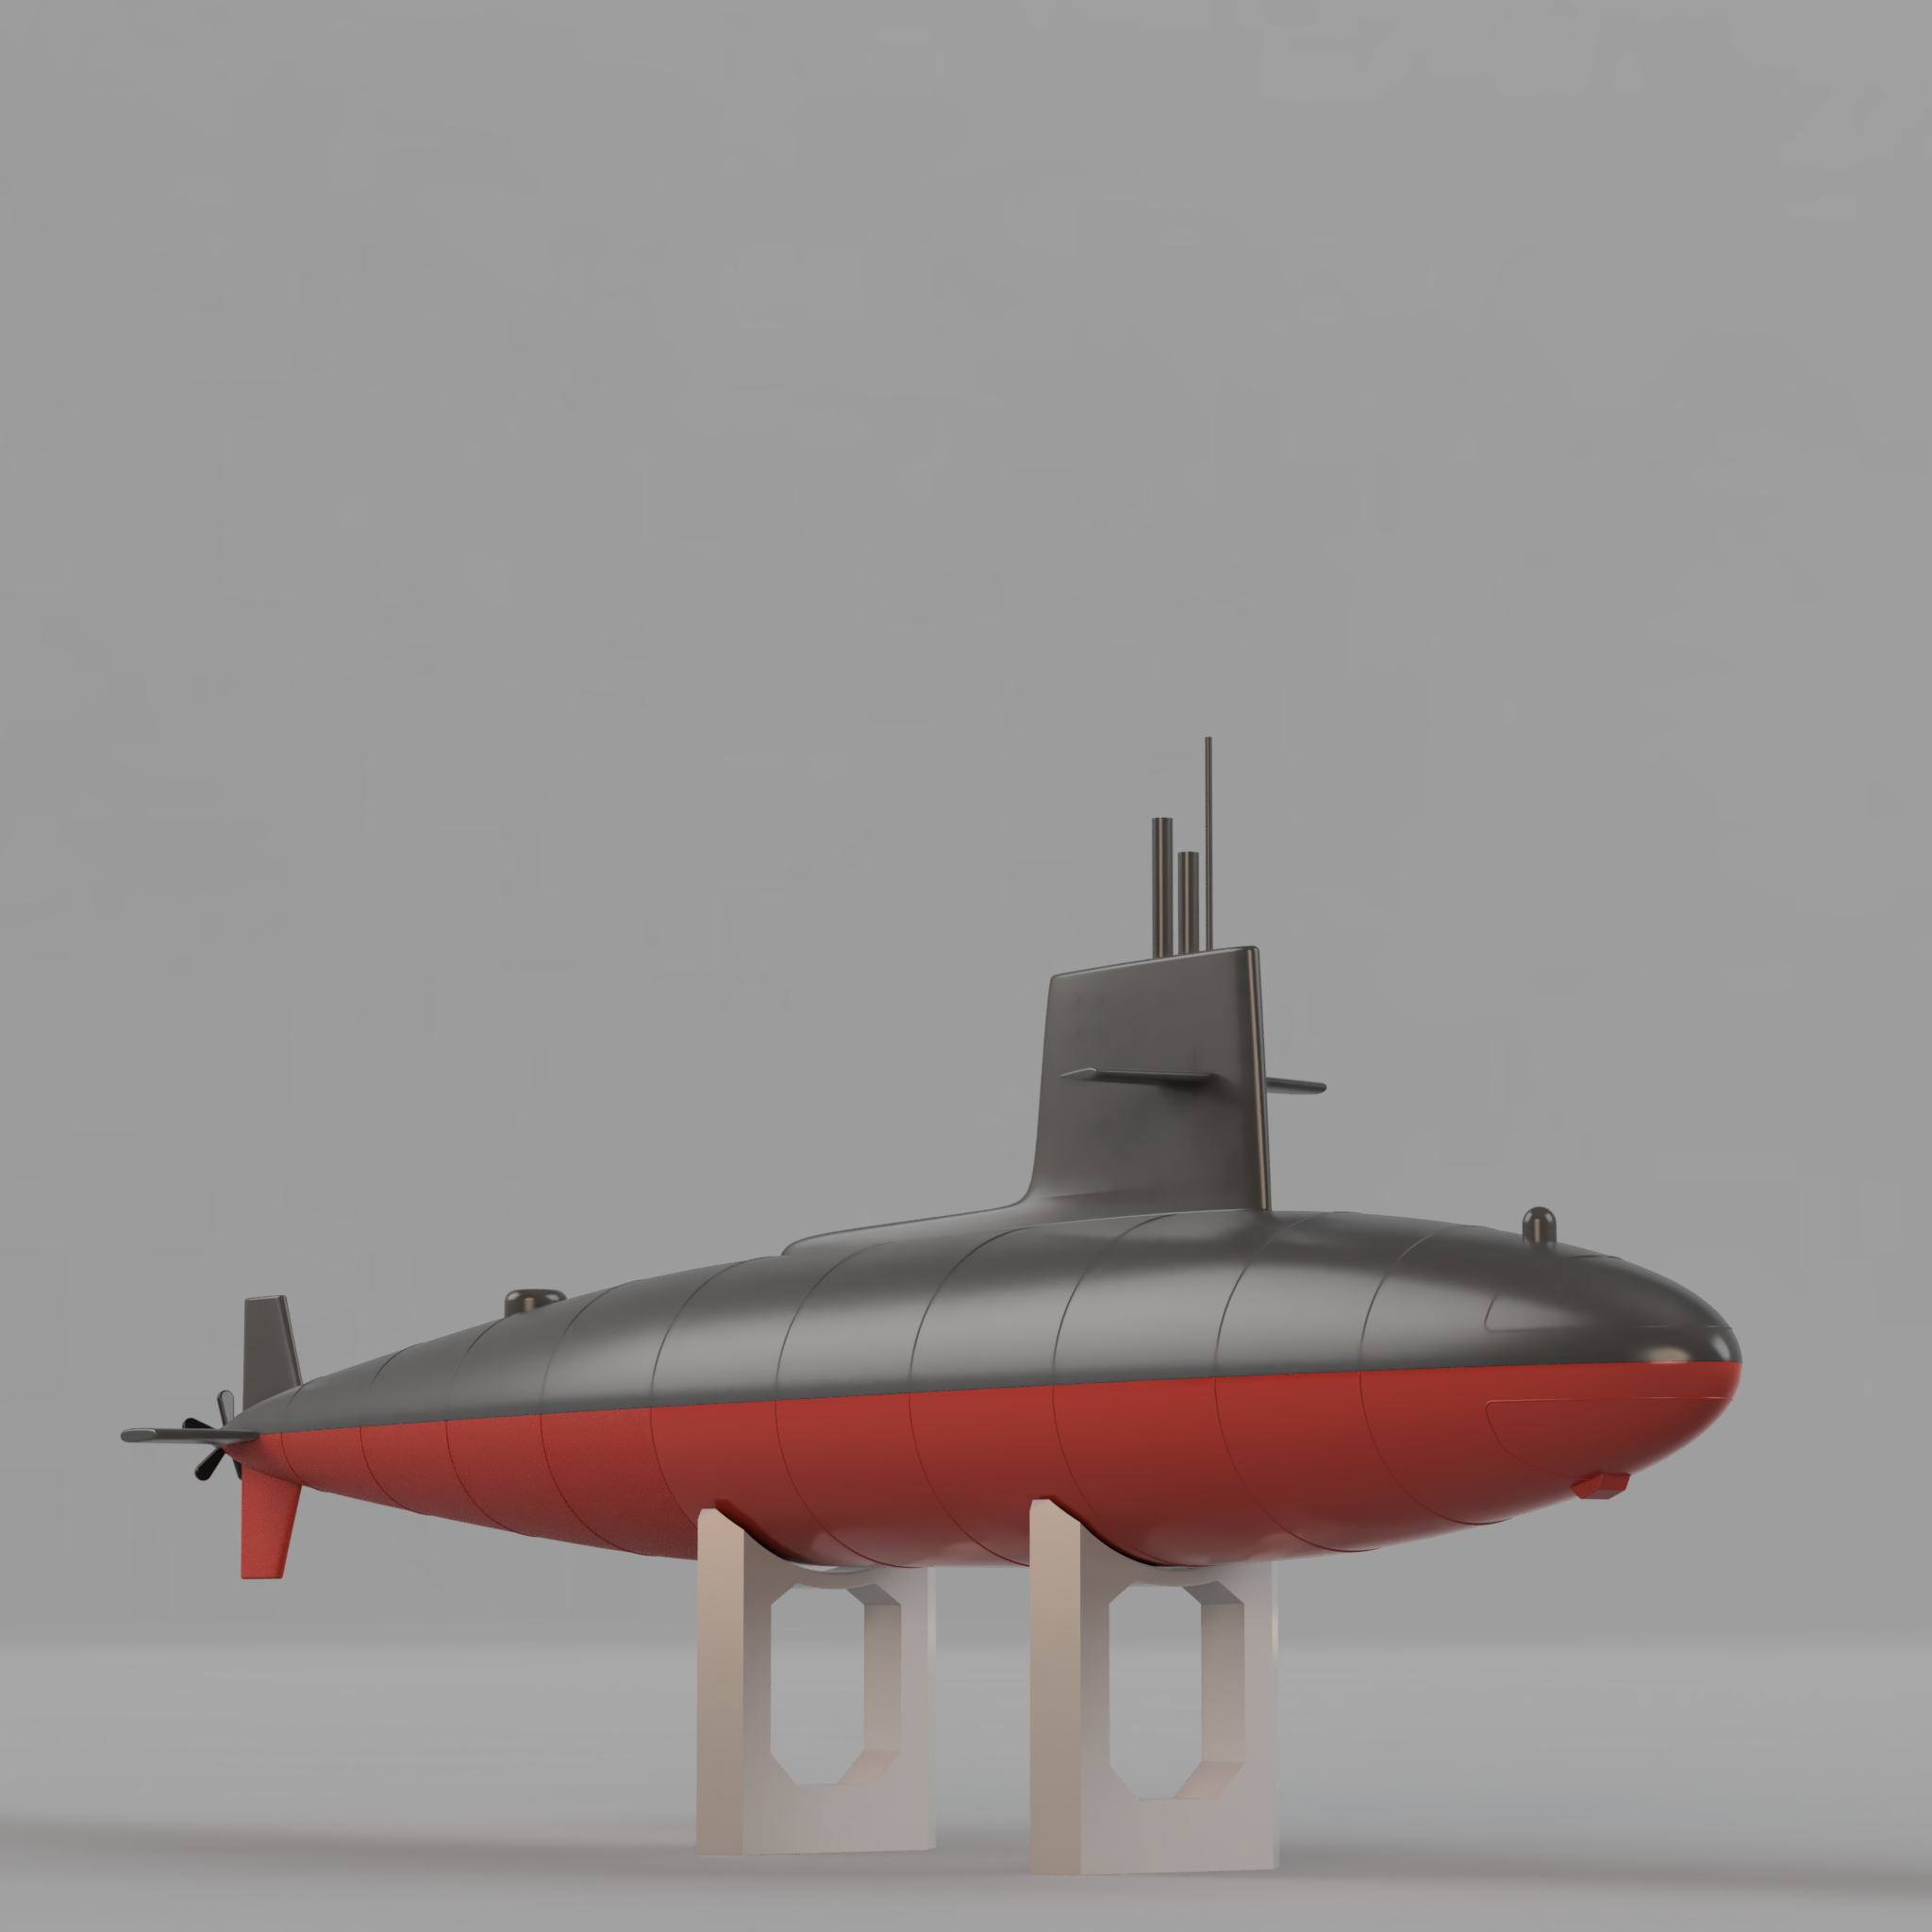 naval submarine